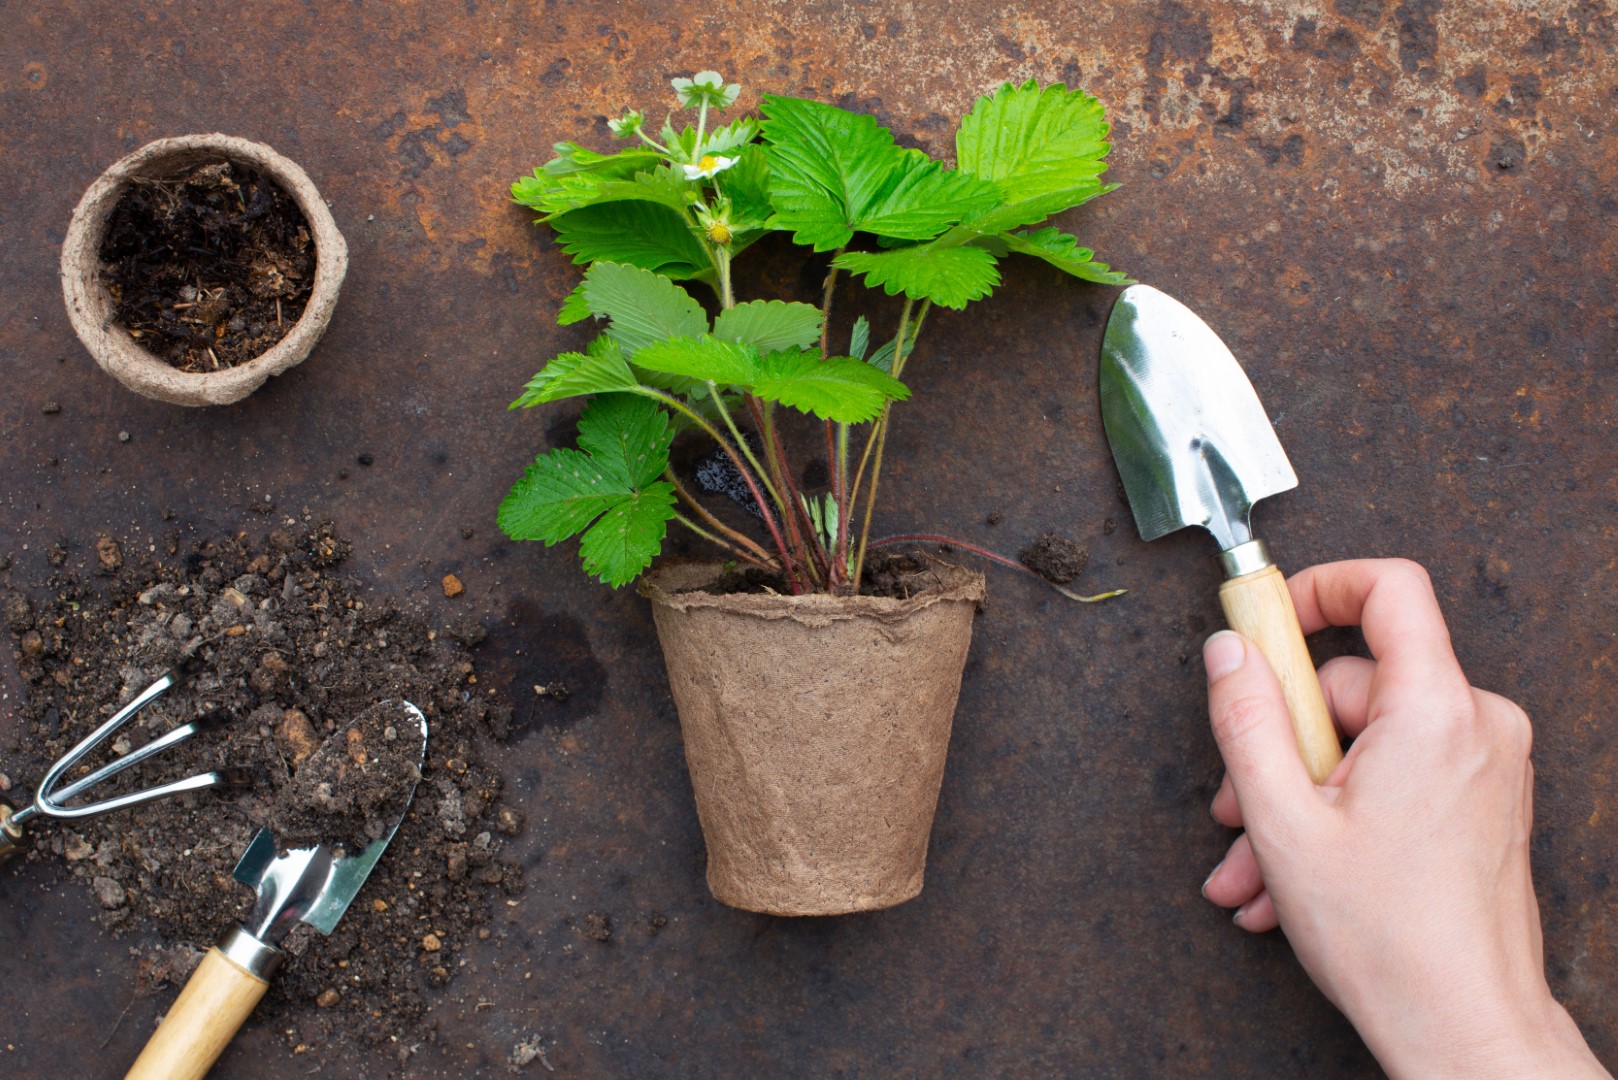 Organic Farming Concept Garden Tools And Plant 2021 08 26 20 00 46 Utc